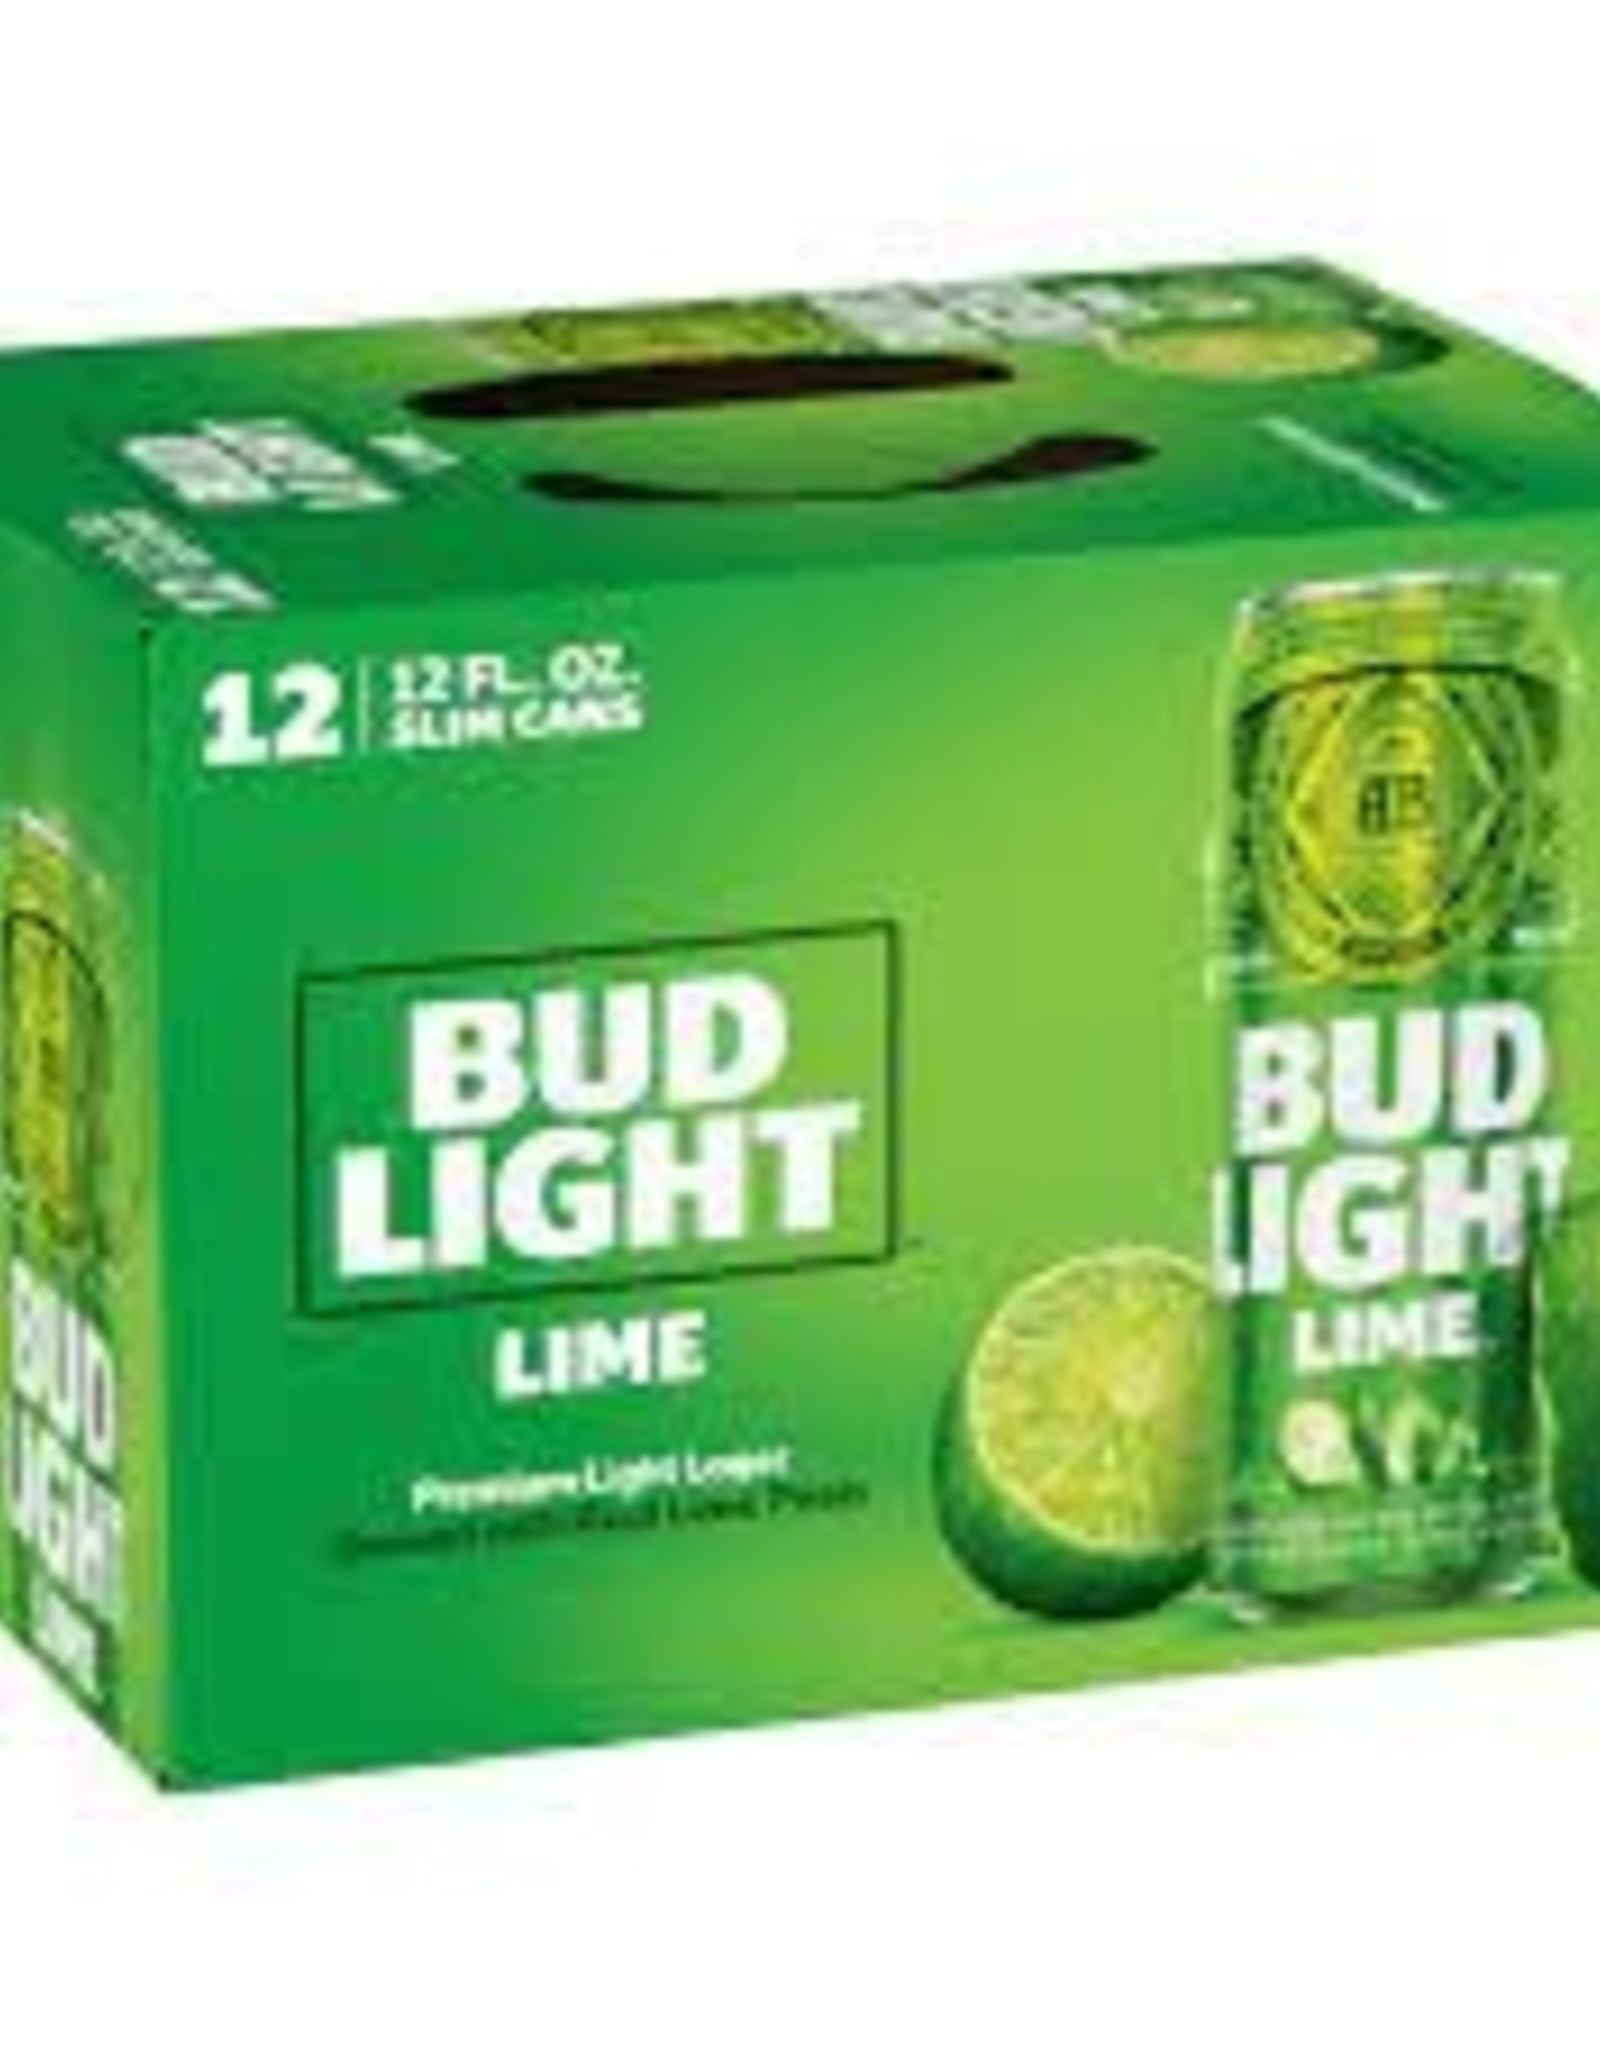 Bud Light Lime 12x12 oz slim cans